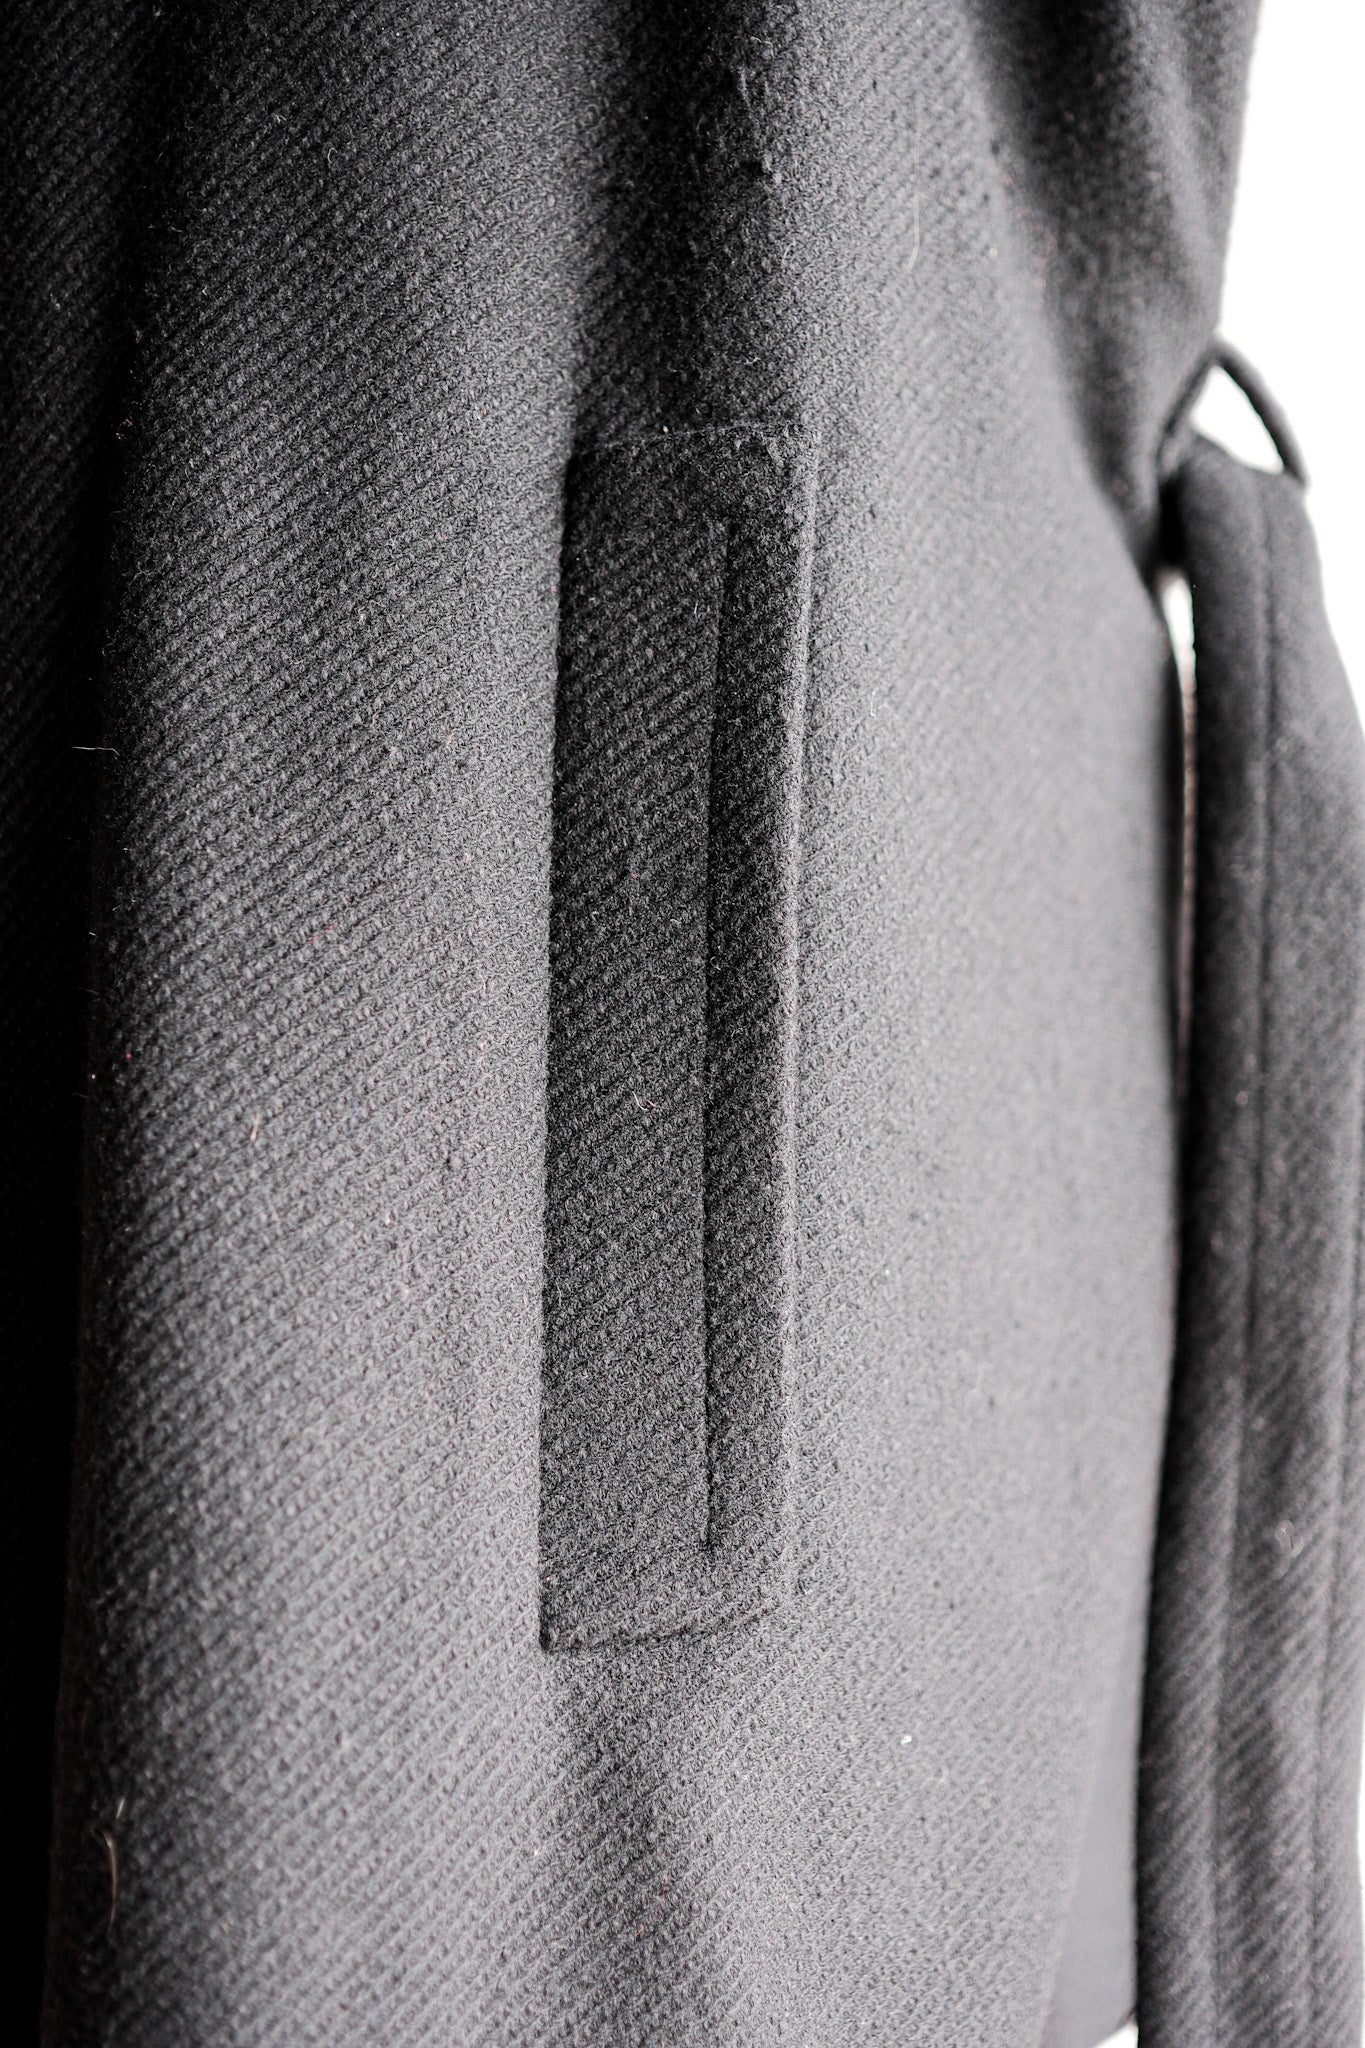 [~ 00's] Old Hermès Paris Cashmere Mix Wool Belted COAT by MARTIN MARGIELA